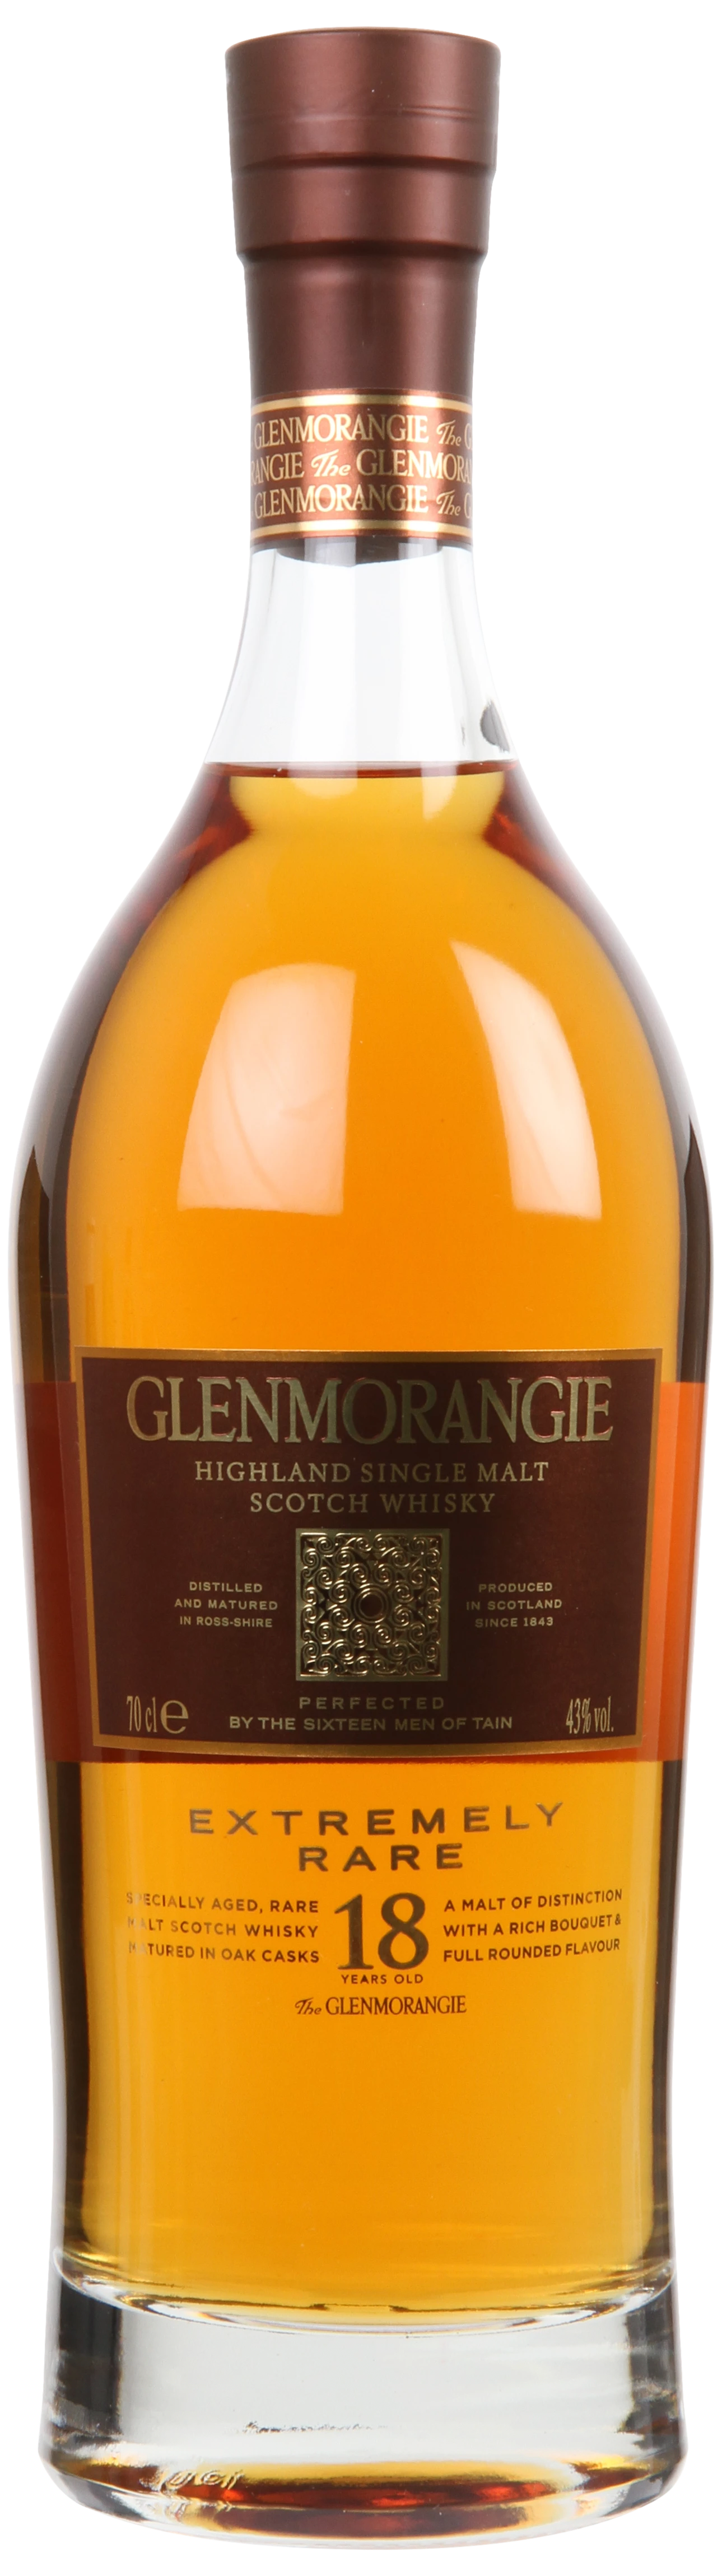 Løgismose Spiritus Glenmorangie Highland Skotland 43% Glenmorangie Whisky 18 Years Old Æske - 221143 2